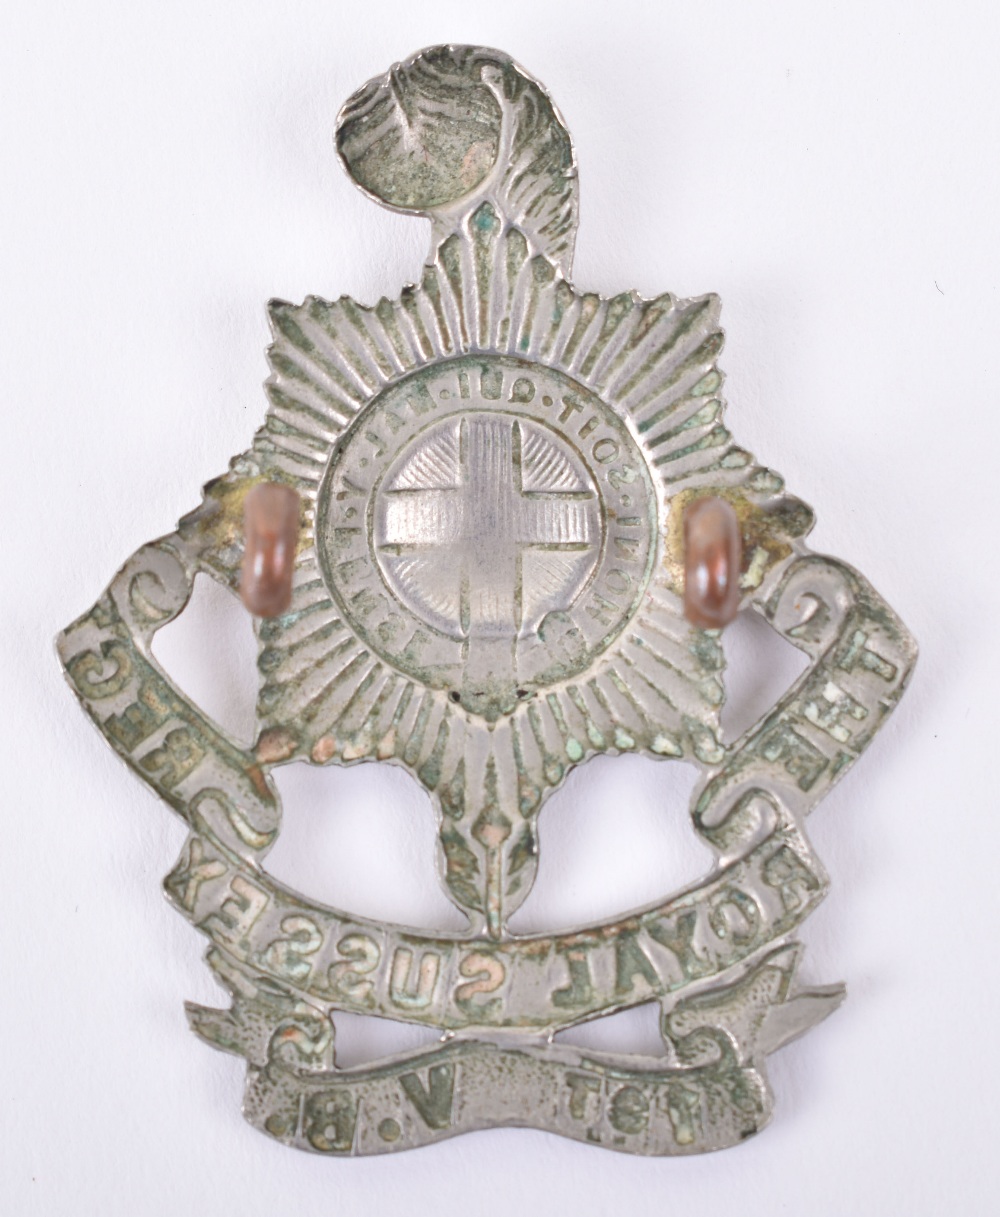 1st Volunteer Battalion Royal Sussex Regiment Cap Badge - Image 2 of 2